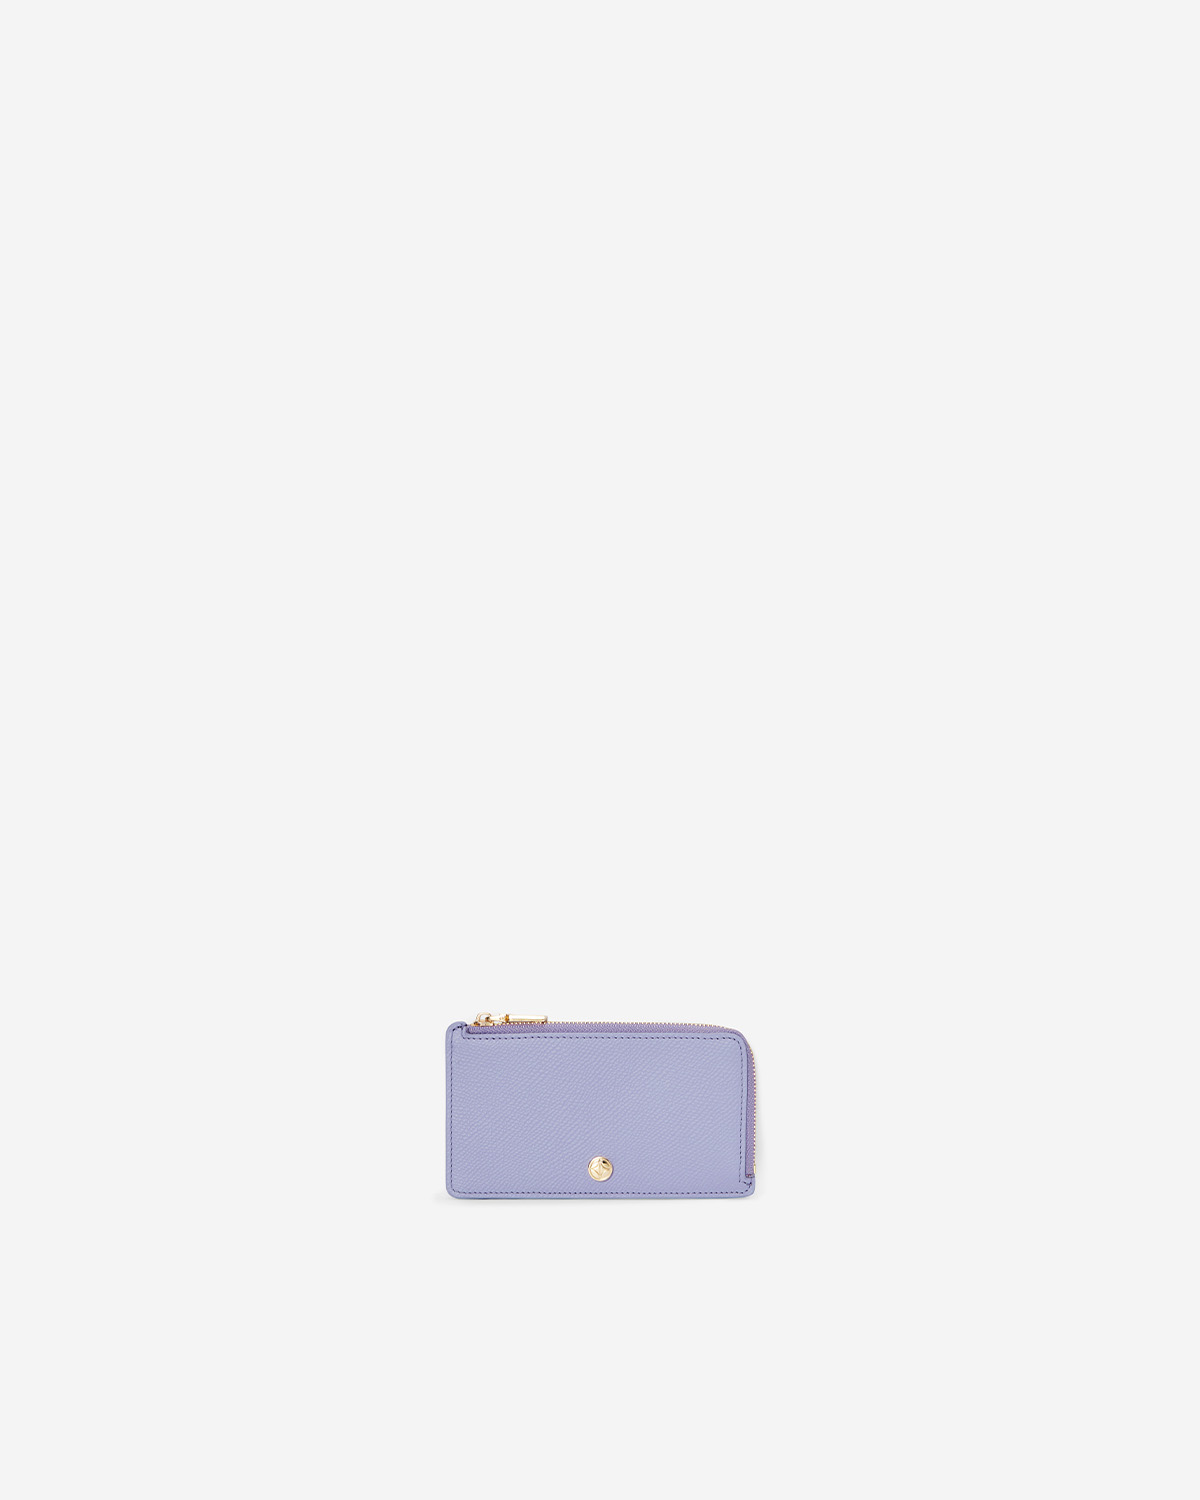 VERA Emily Long Card holder in Charming Purple กระเป๋าใส่บัตรหนังแท้ ทรงยาว พร้อมช่องซิบ สีม่วง